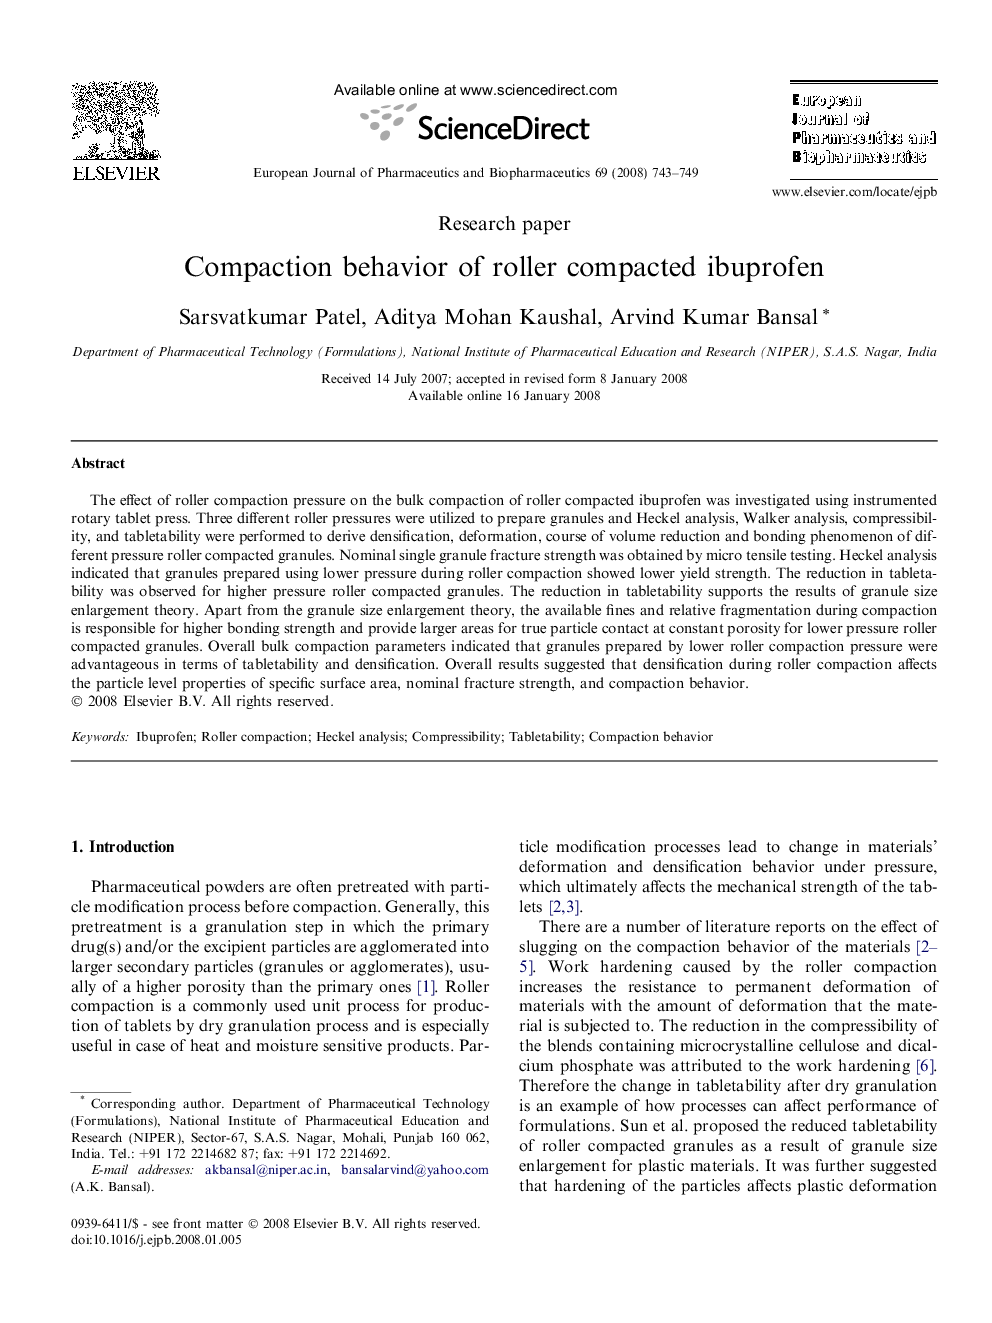 Compaction behavior of roller compacted ibuprofen